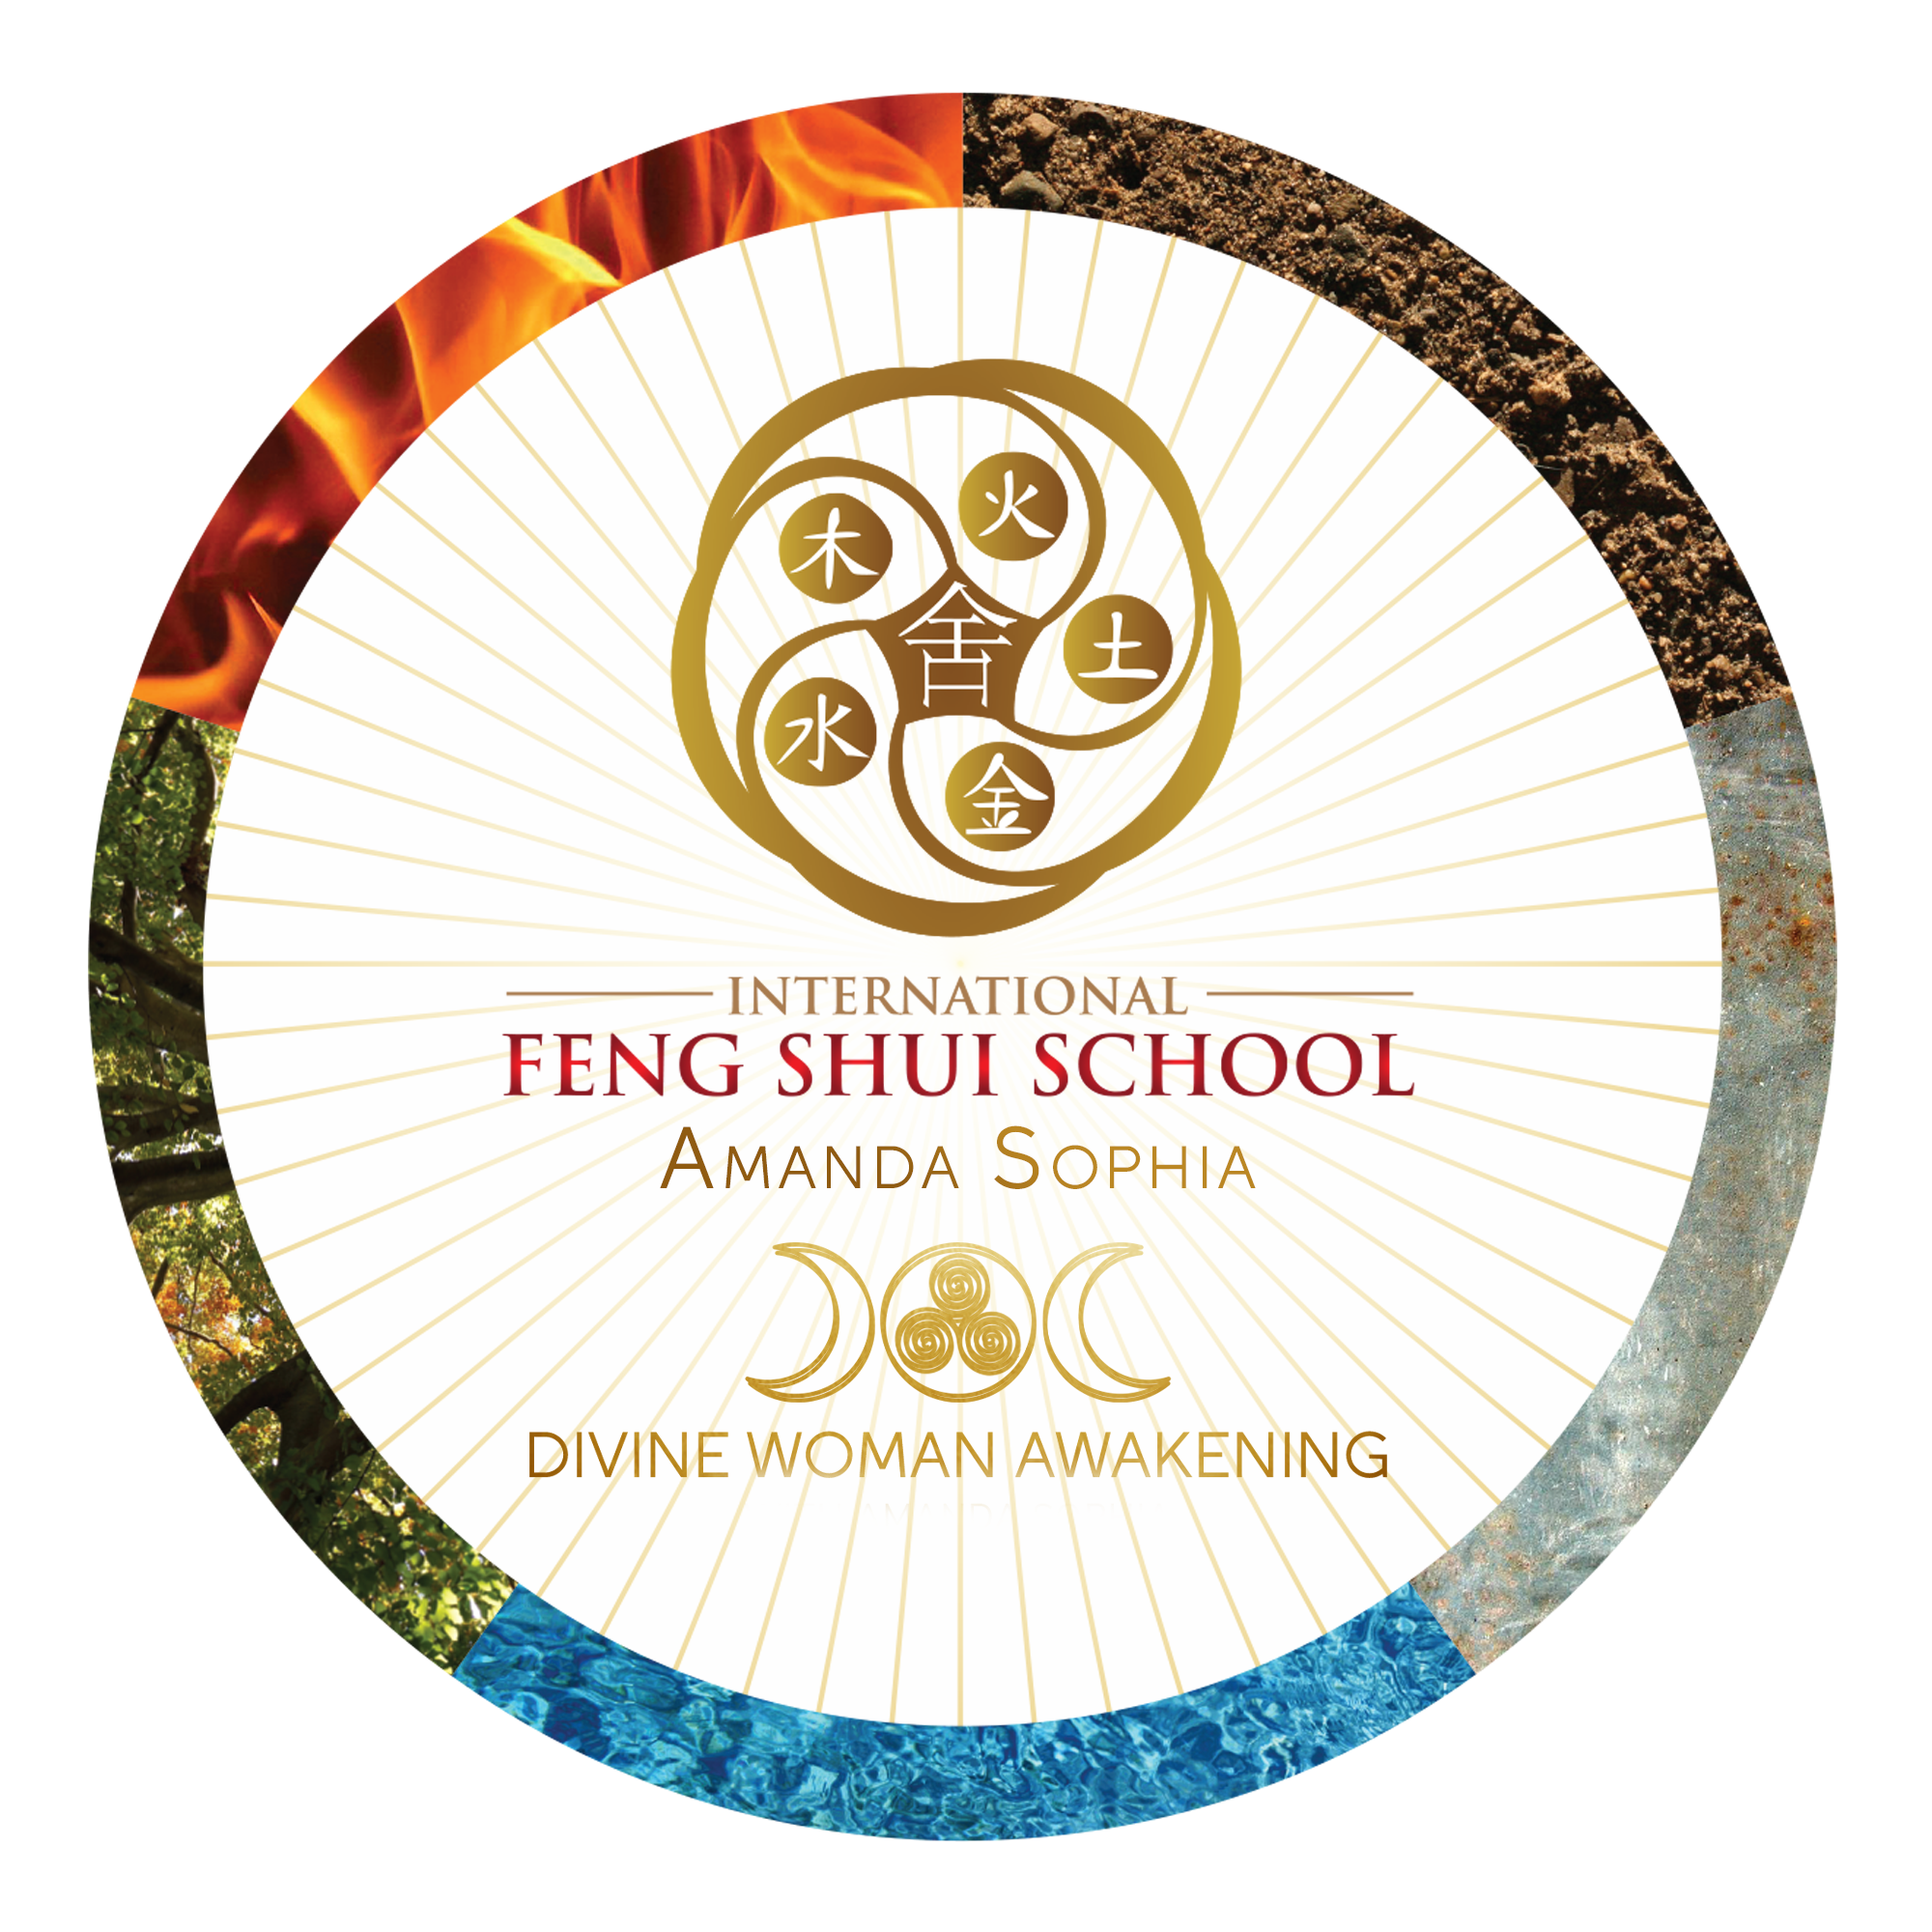 Combined internationalfengshuischool-logo-divinewomanawakening